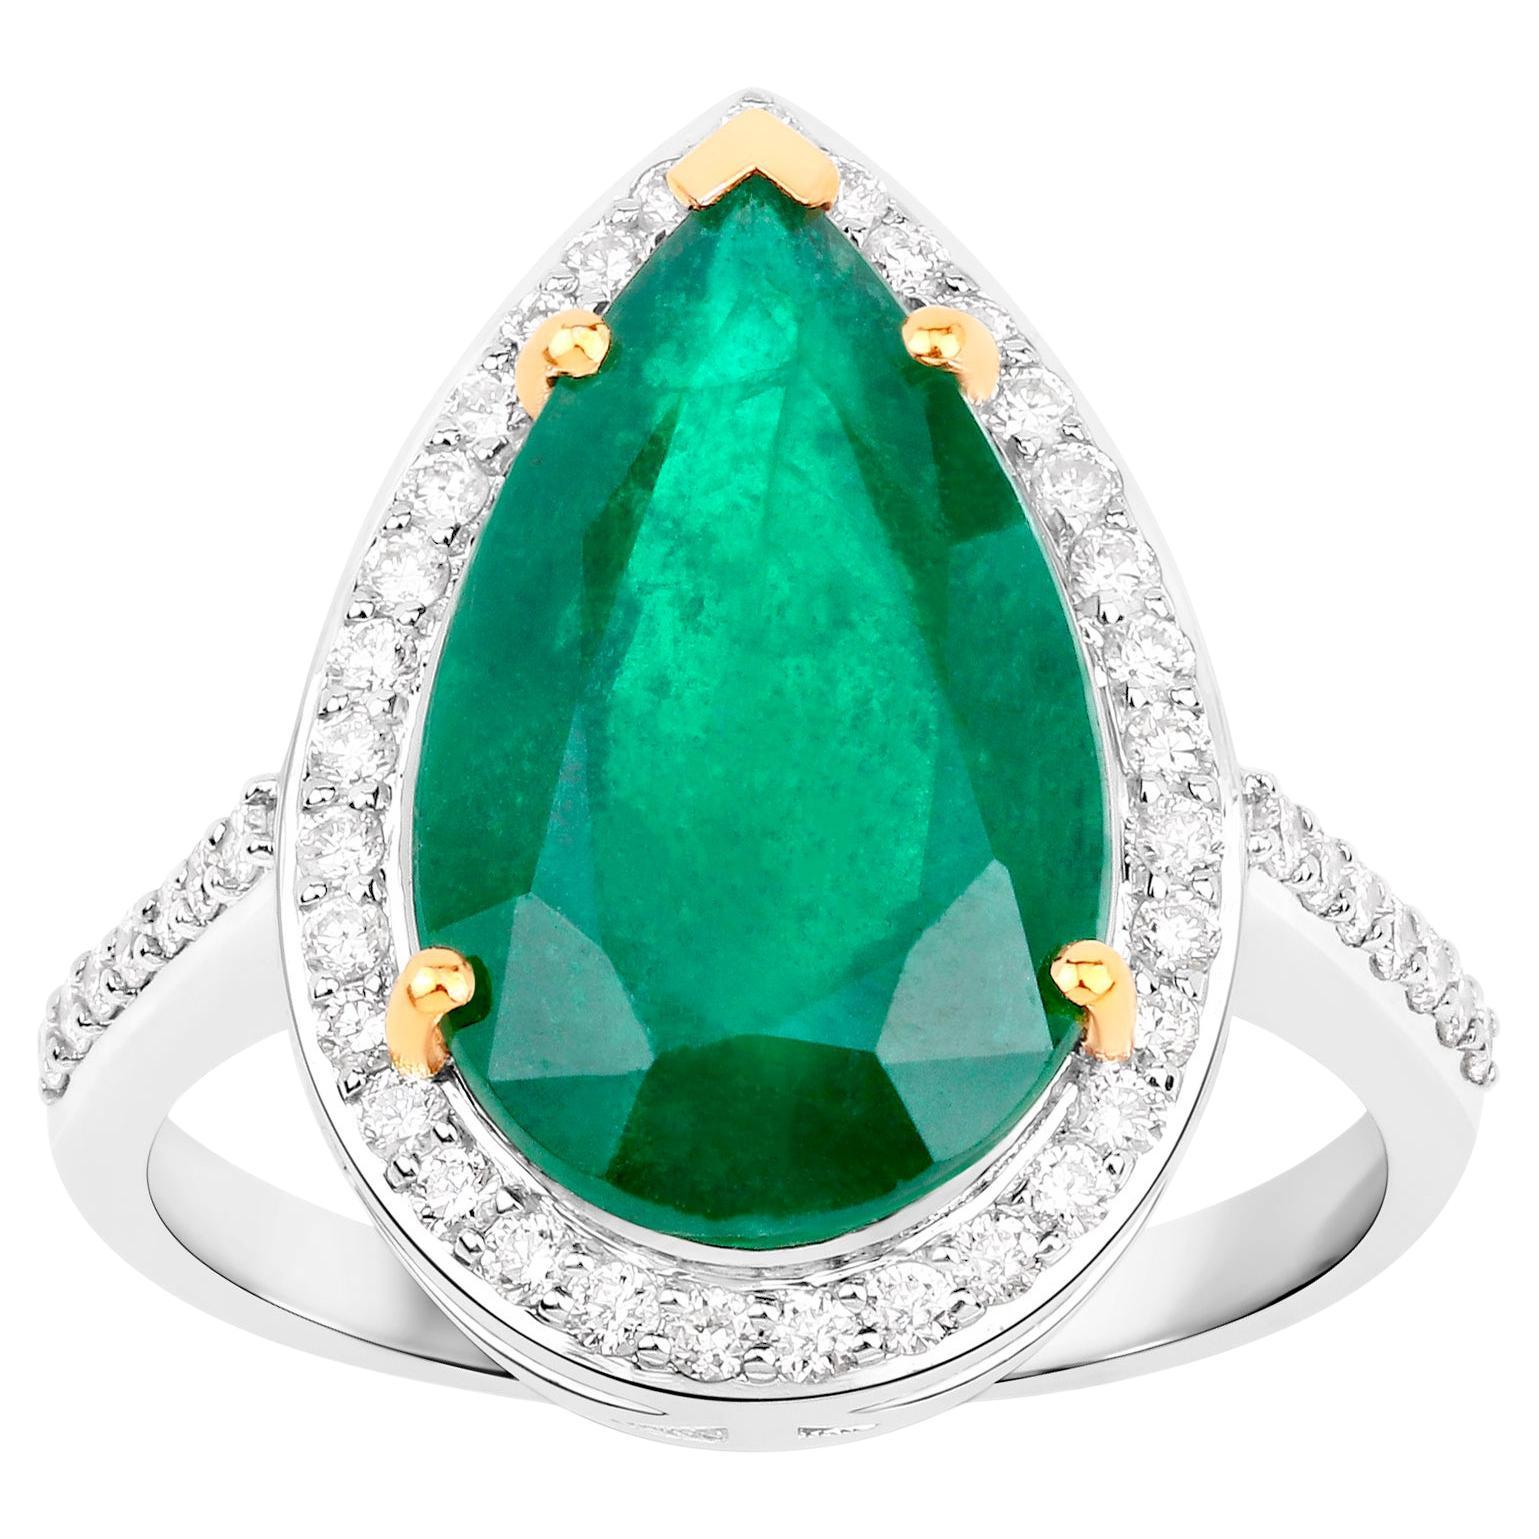 IGI Certified Zambian Emerald Ring With Diamonds 5.94 Carats 14K Gold